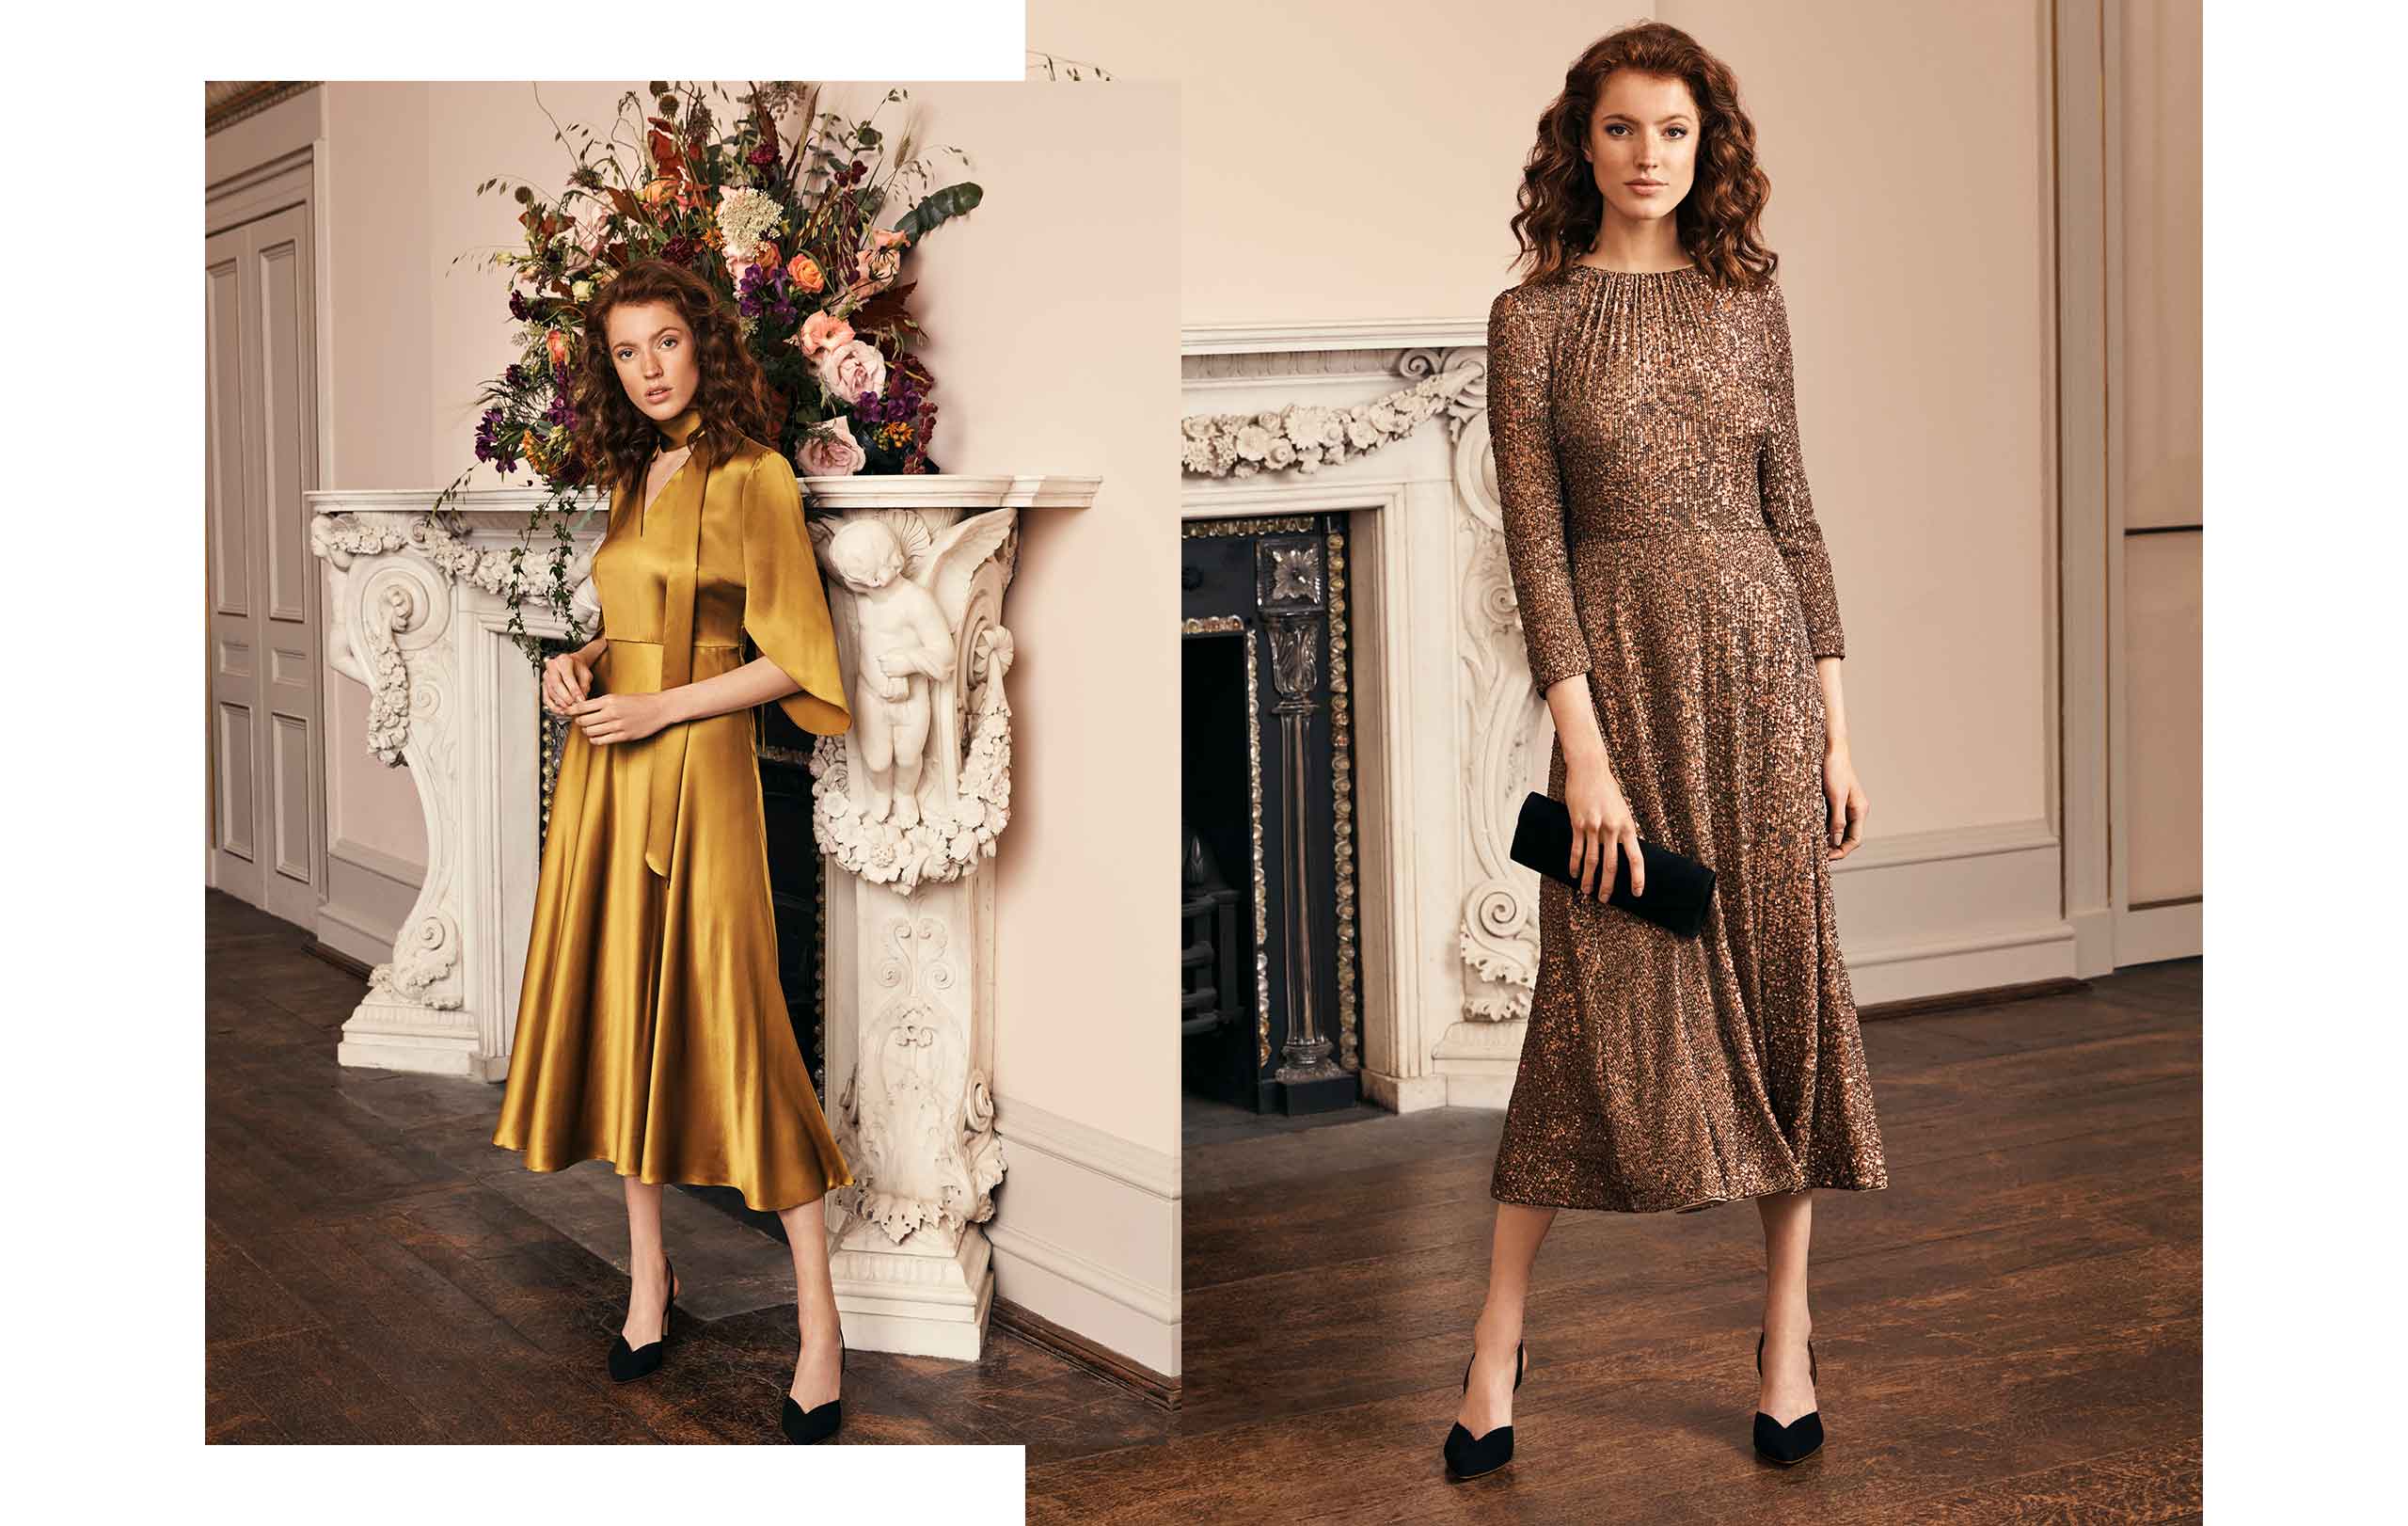 Hobbs London Women's Fashion, Autumn Winter 2019